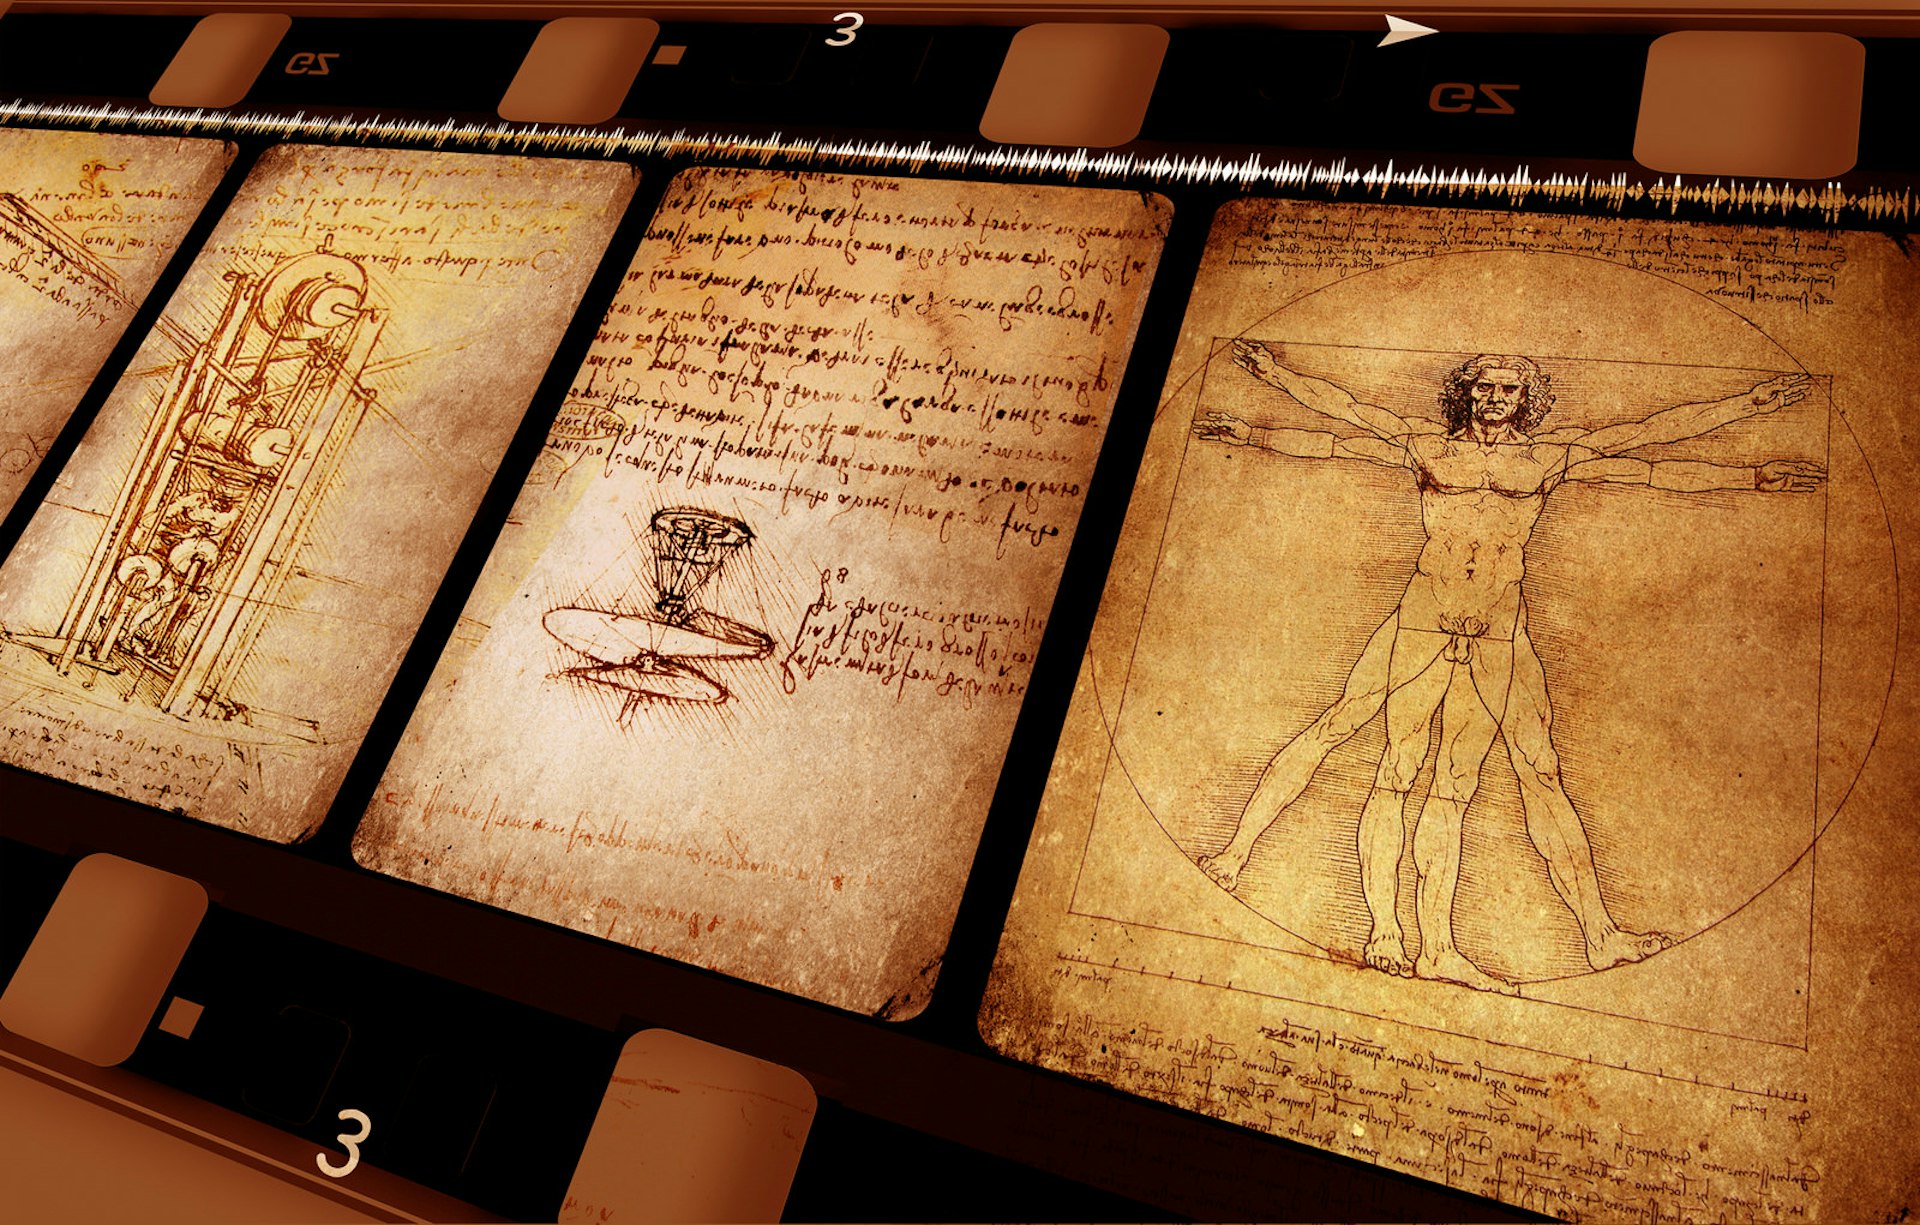 Anatomical sketches from Leonardo da Vinci's notebooks